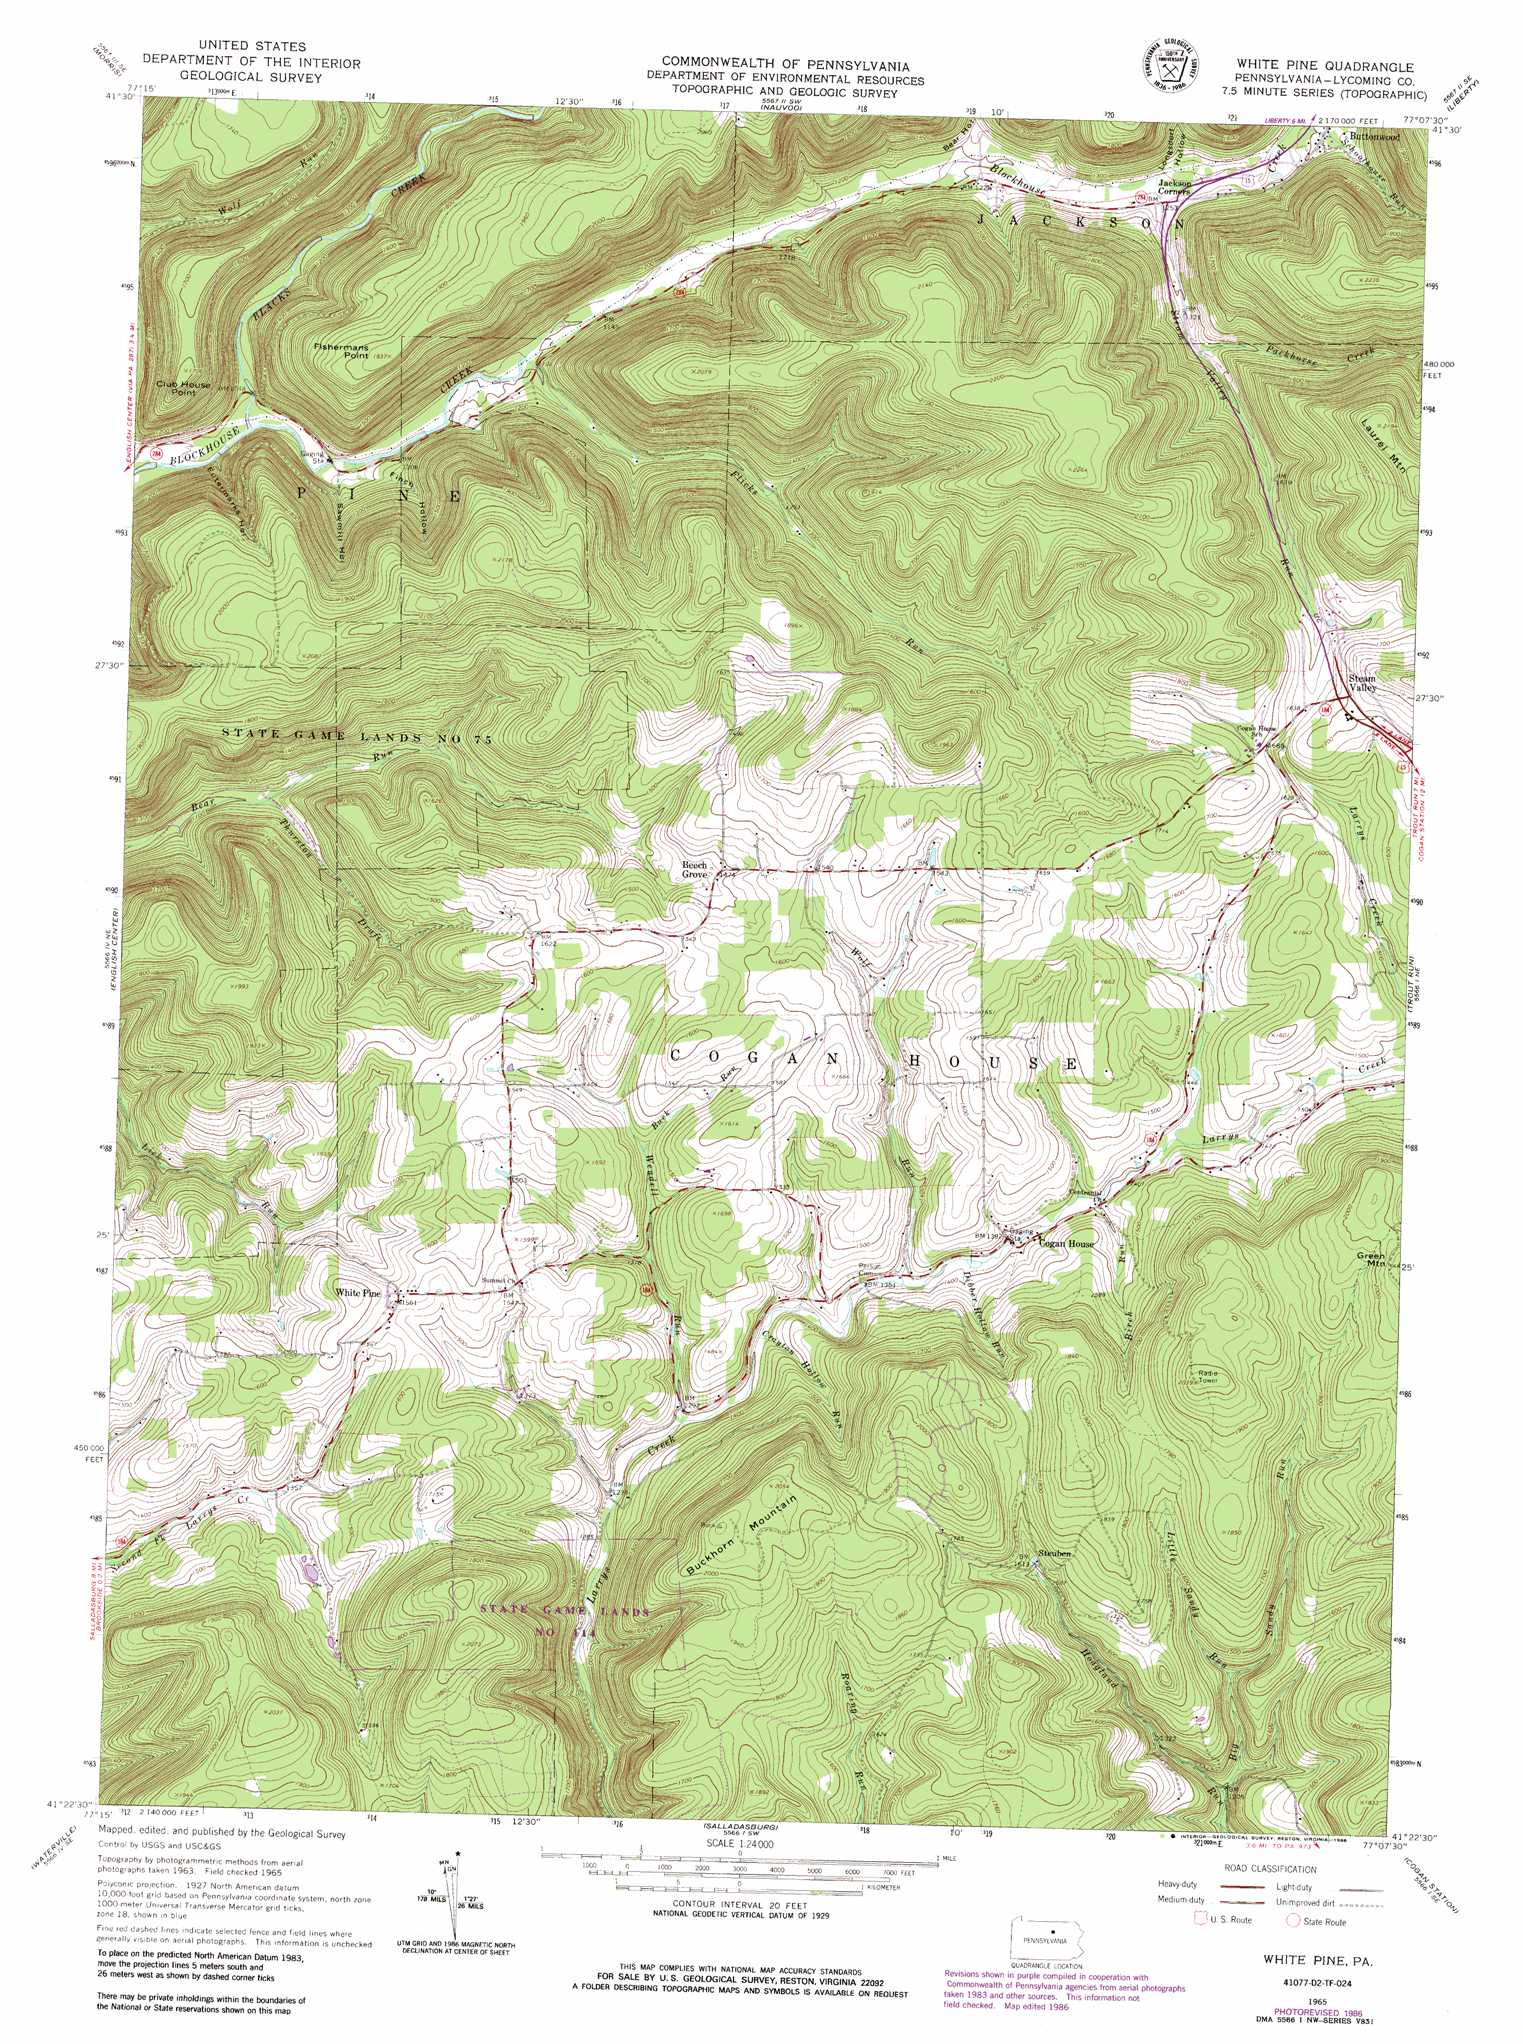 White Pine topographic map, PA - USGS Topo Quad 41077d2